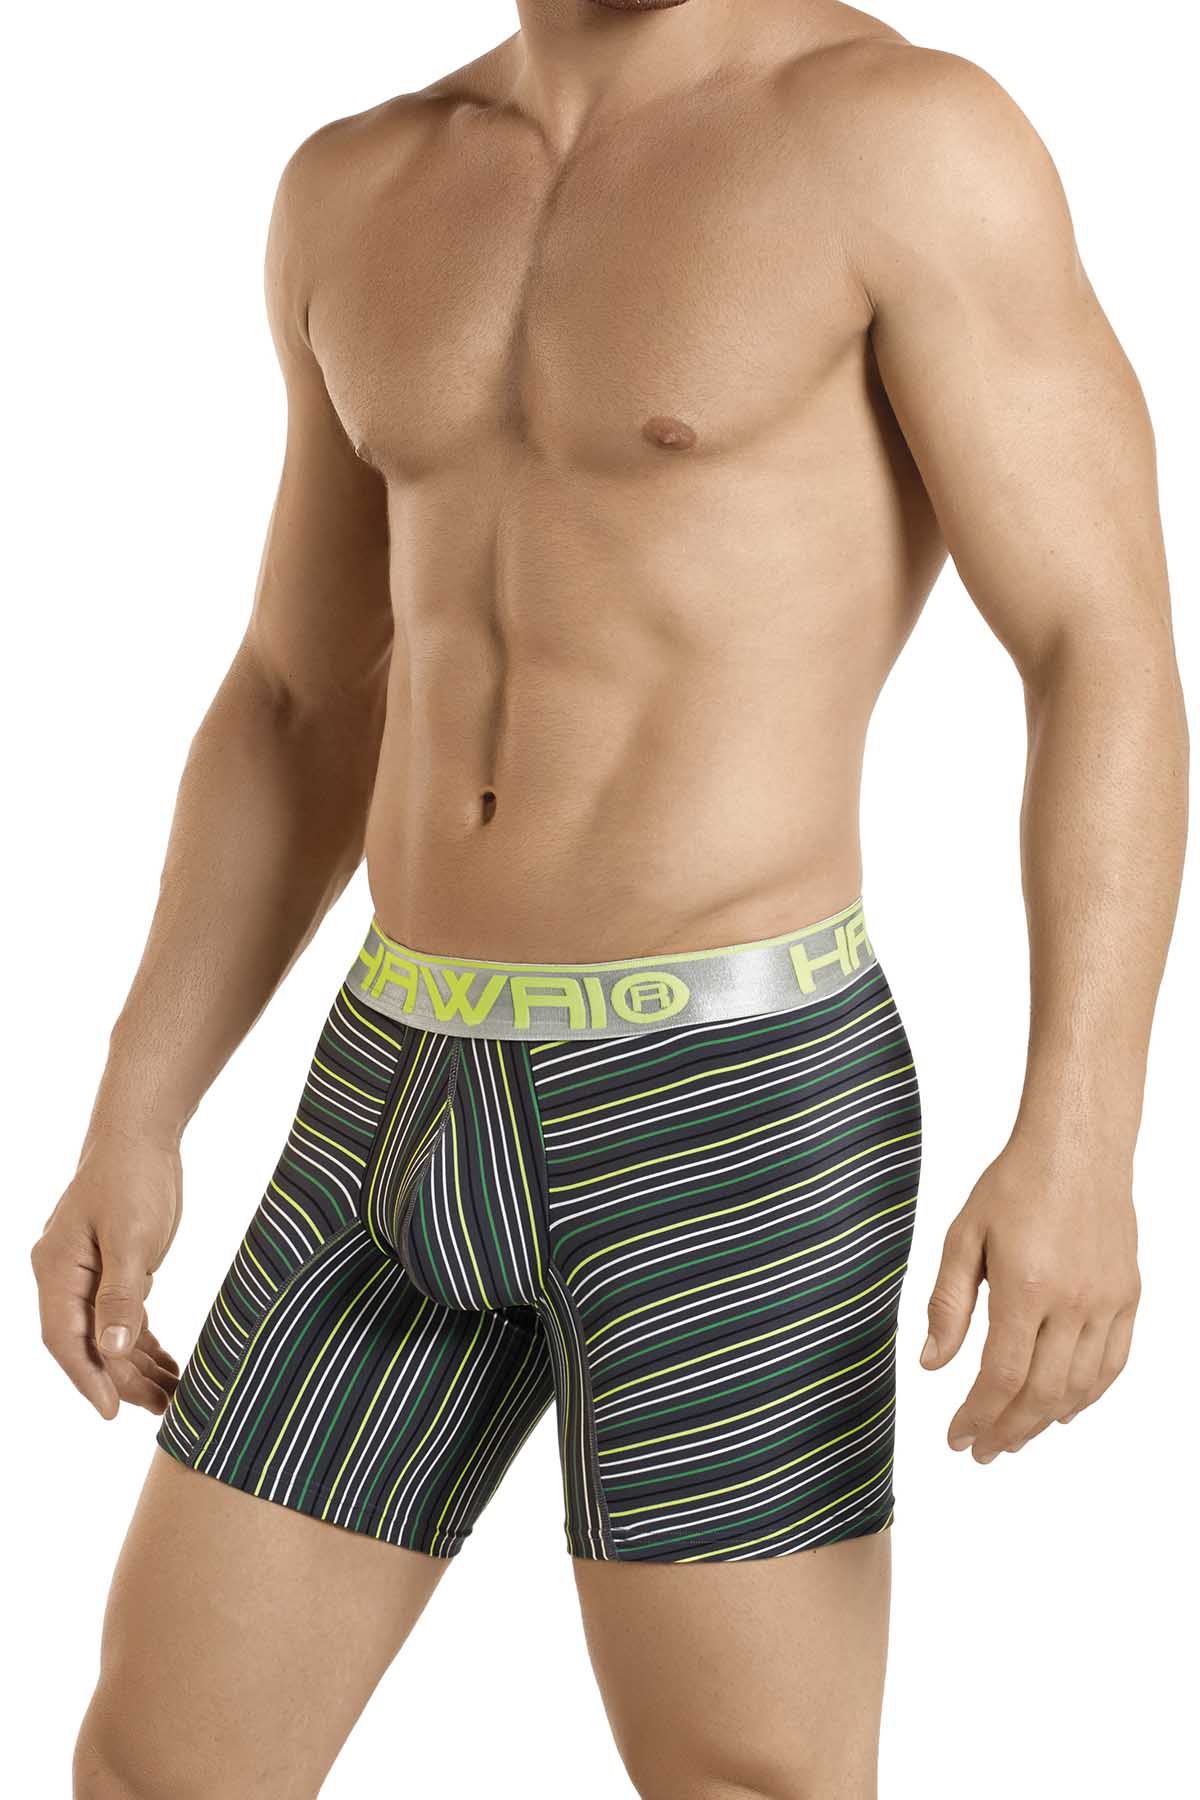 Hawai Grey & Stripes Boxer